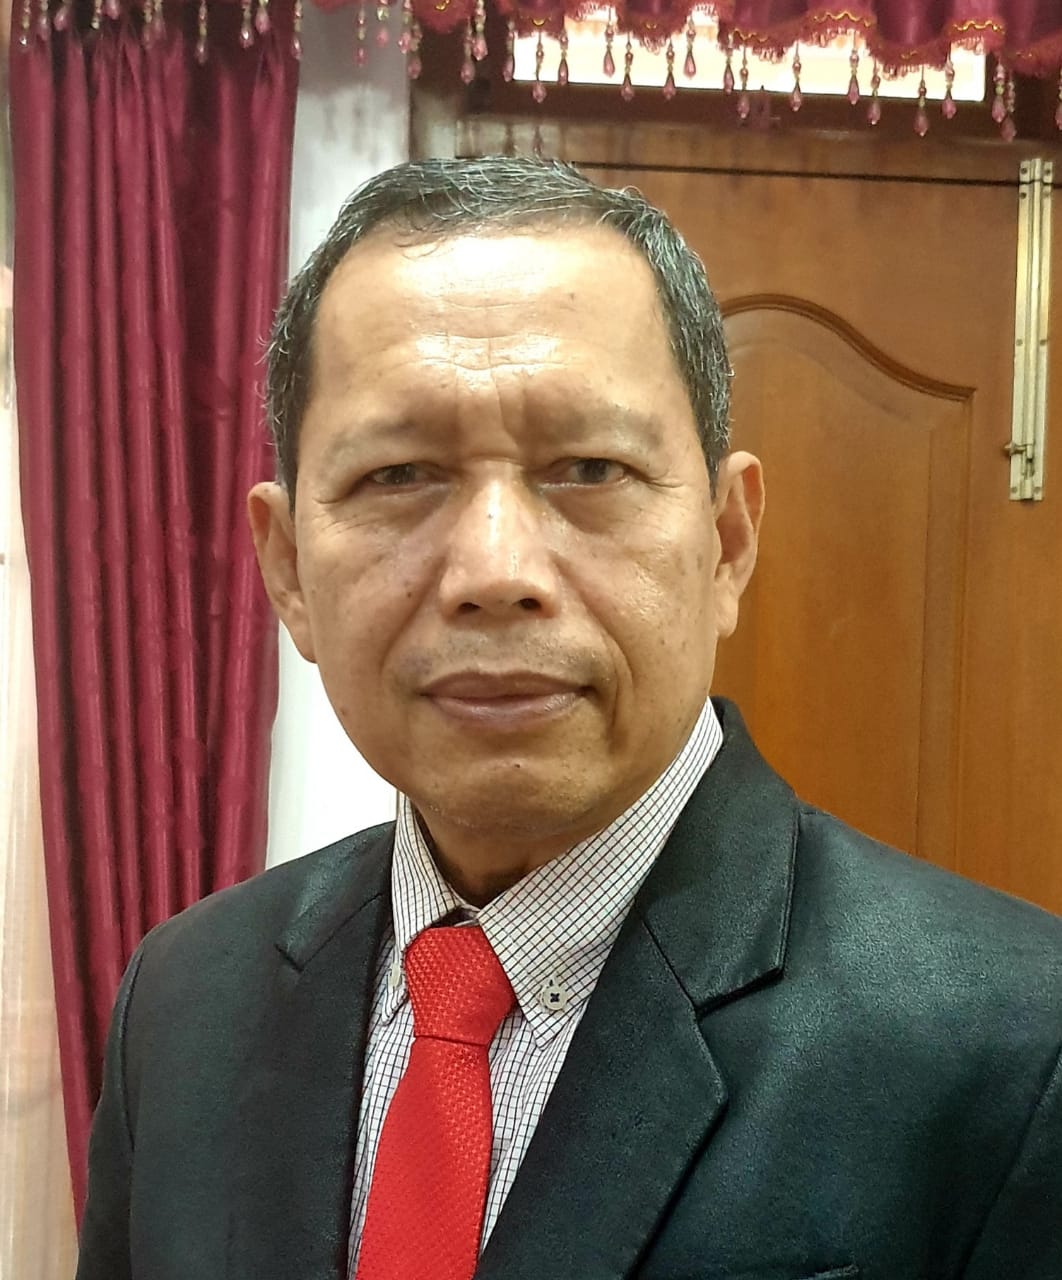 Anggota DPRD Komisi IV Drs. H. Daddy Rohanady dari Fraksi Partai Gerindra